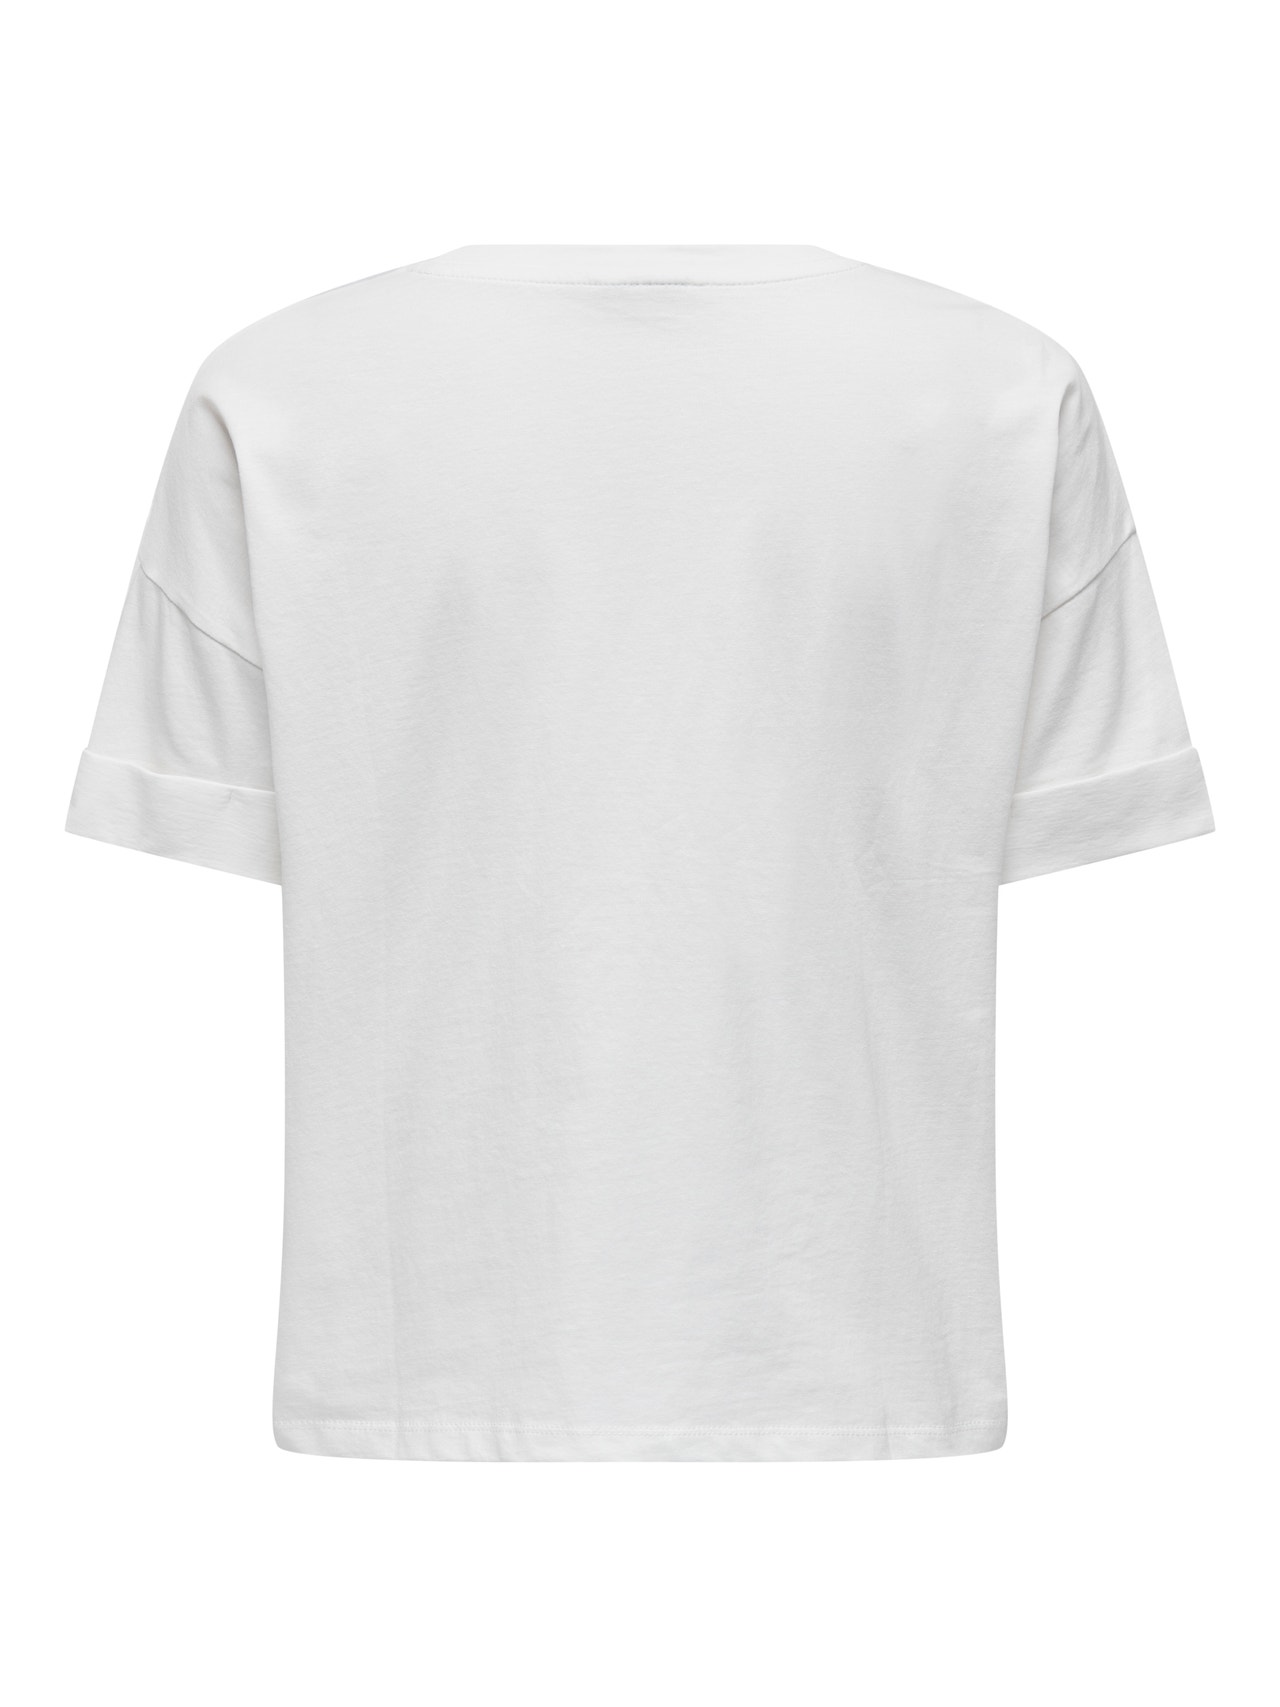 ONLY Camisetas Corte regular Cuello redondo -Cloud Dancer - 15295543